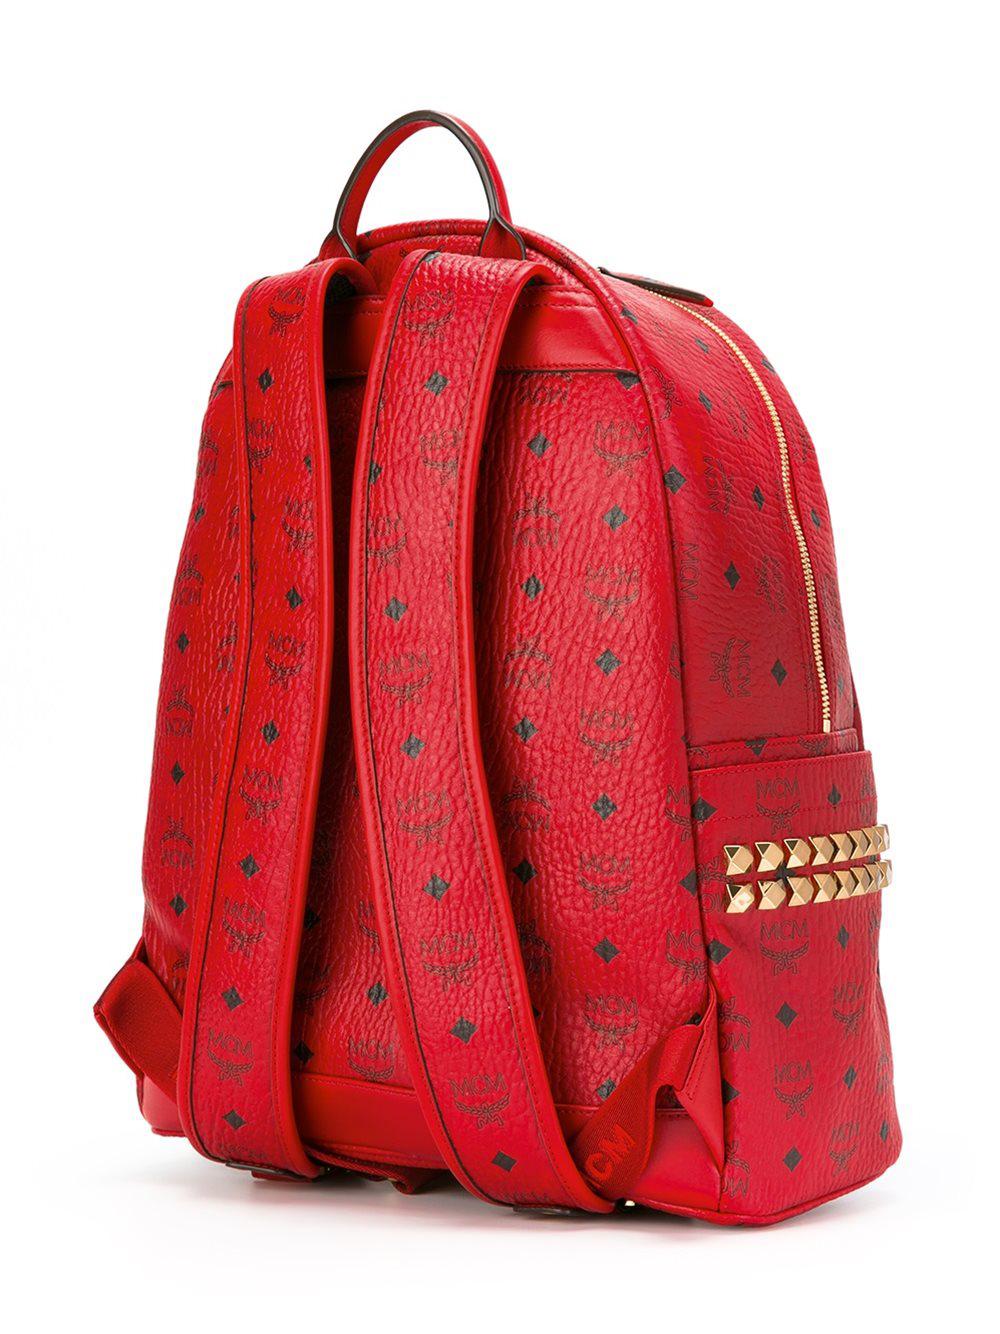 Lyst - Mcm Logo Print Backpack in Red for Men